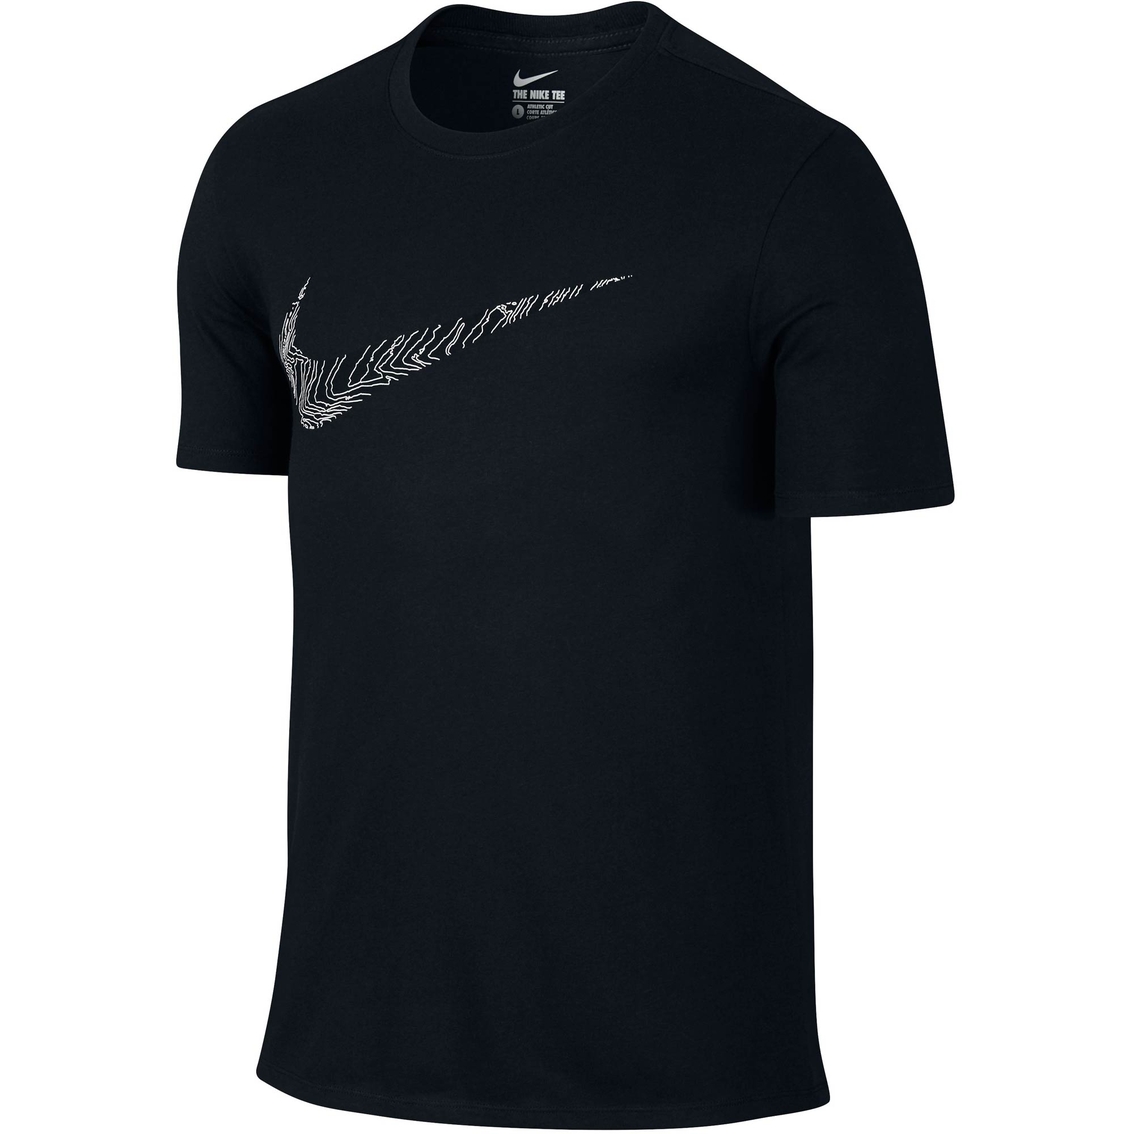 Nike Dri-fit Cotton Swoosh Topo Fill Tee | Shirts | Clothing ...